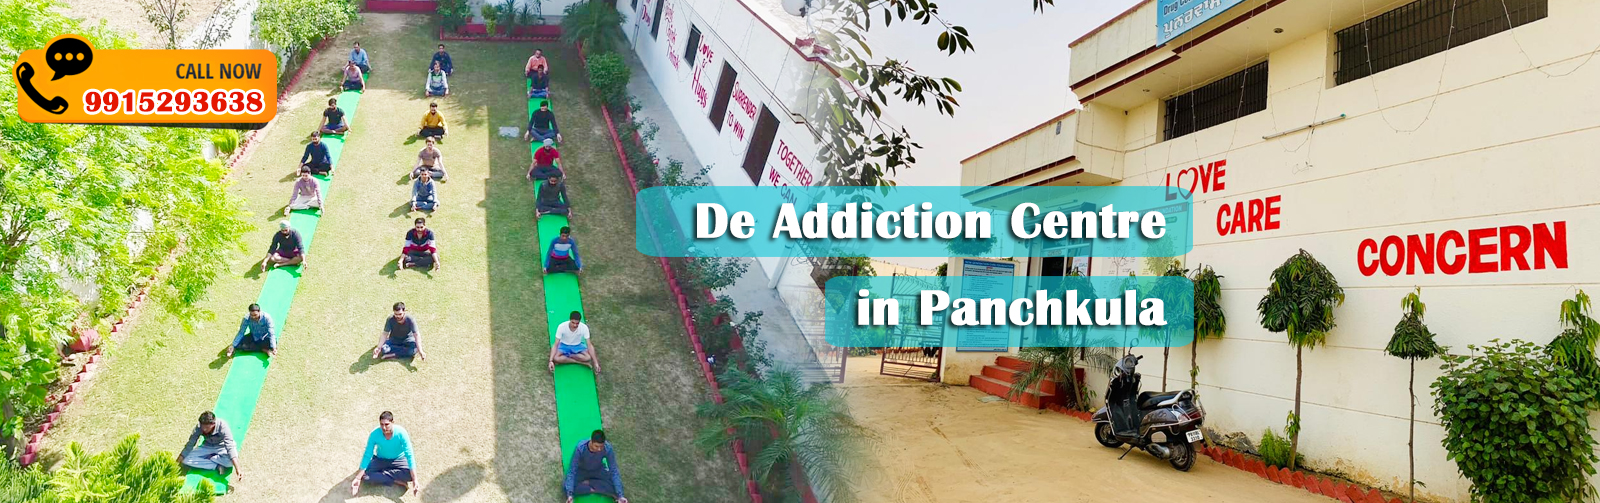 De Addiction Centre in Panchkula